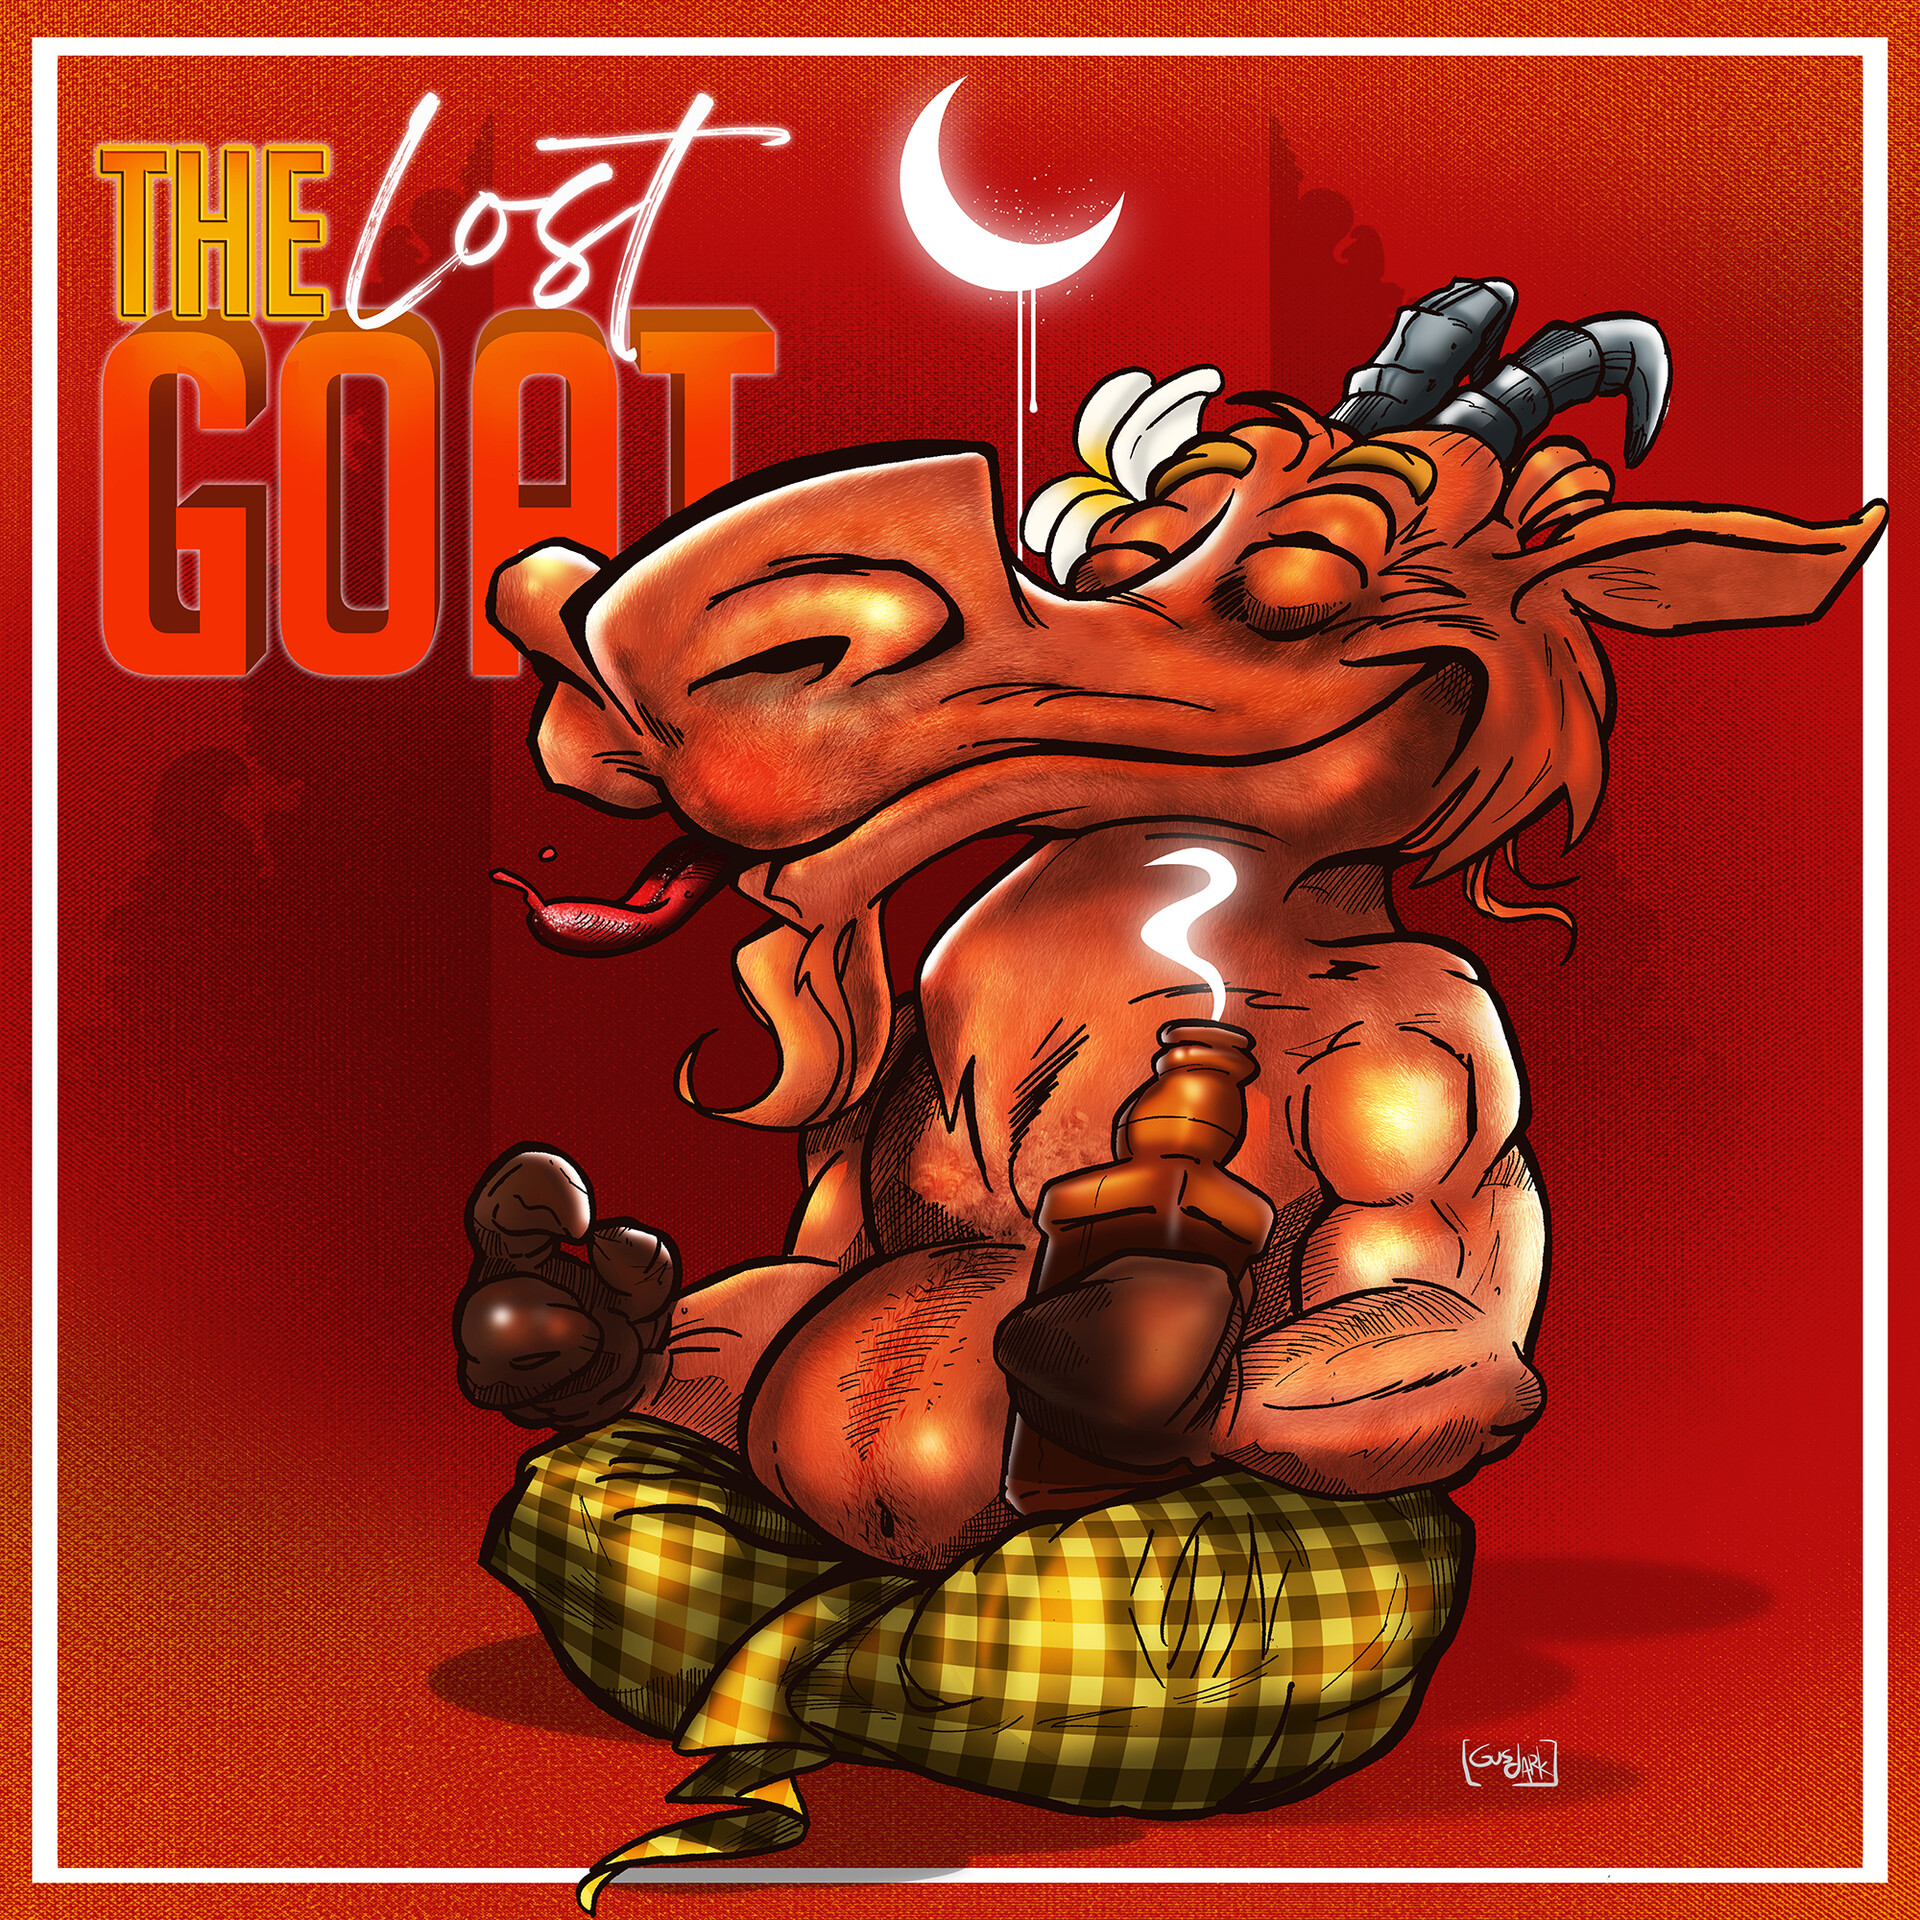 ArtStation - The Lost Goat